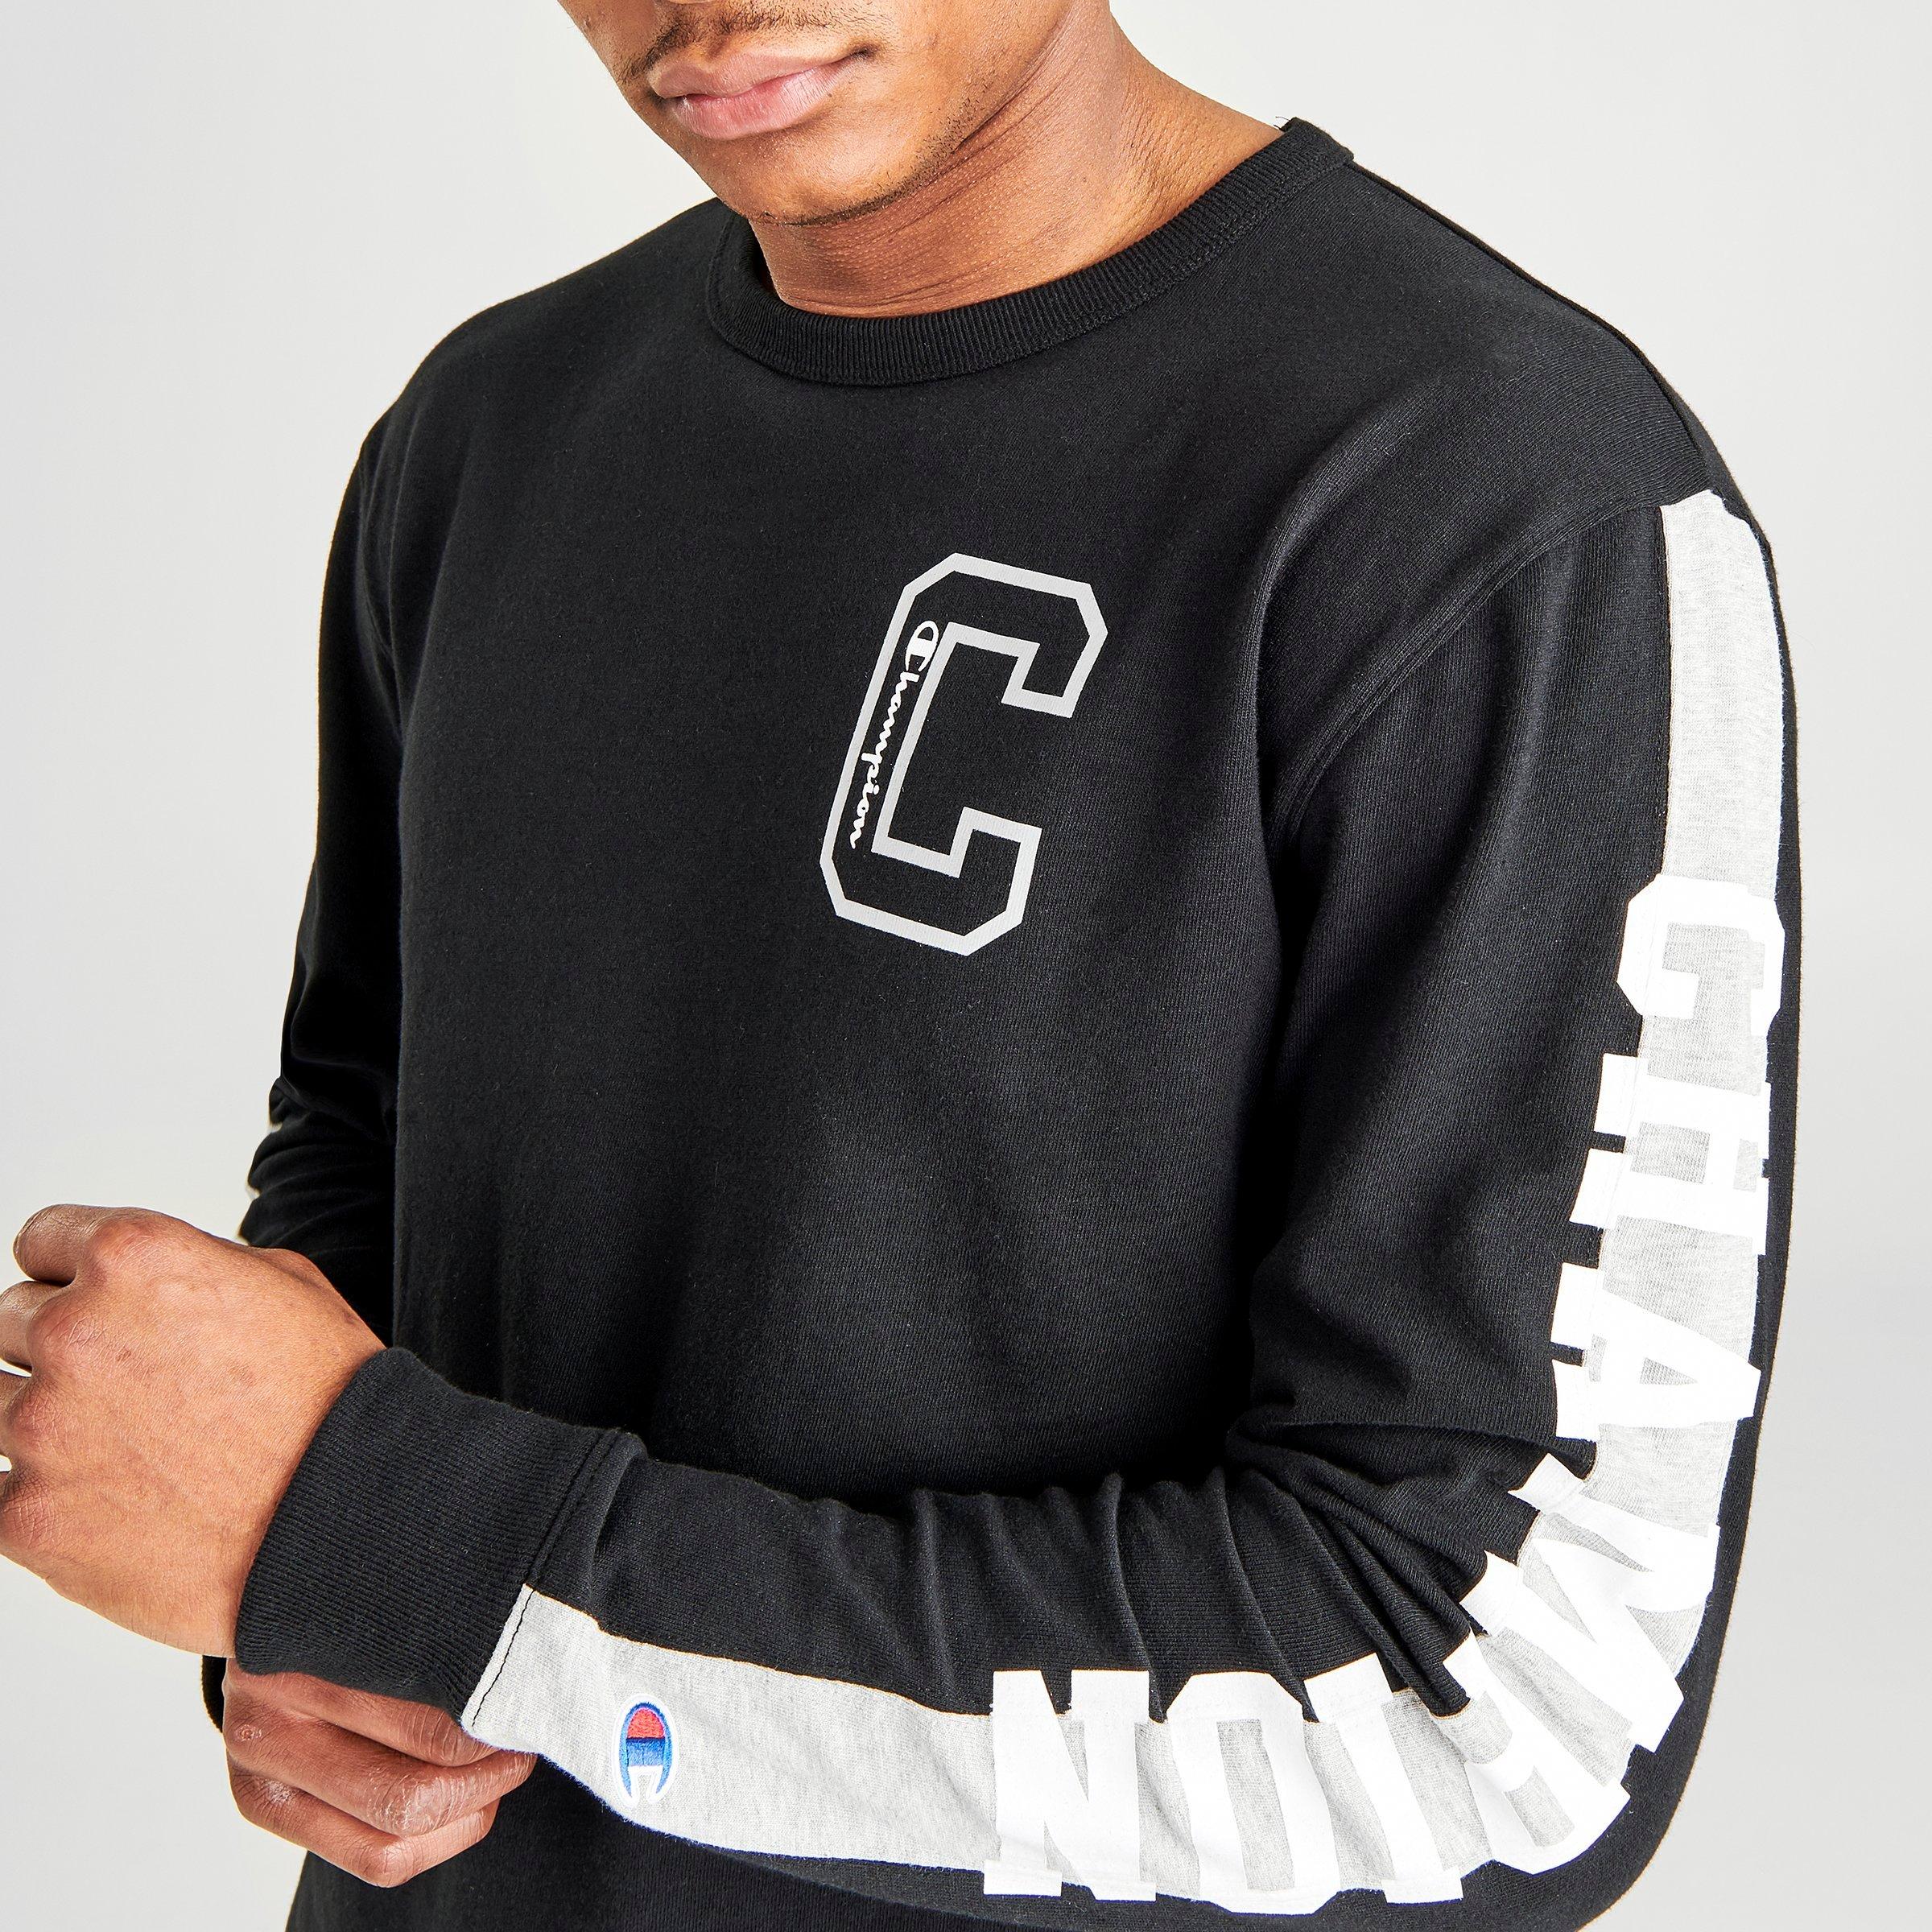 champion varsity c logo pullover hoodie